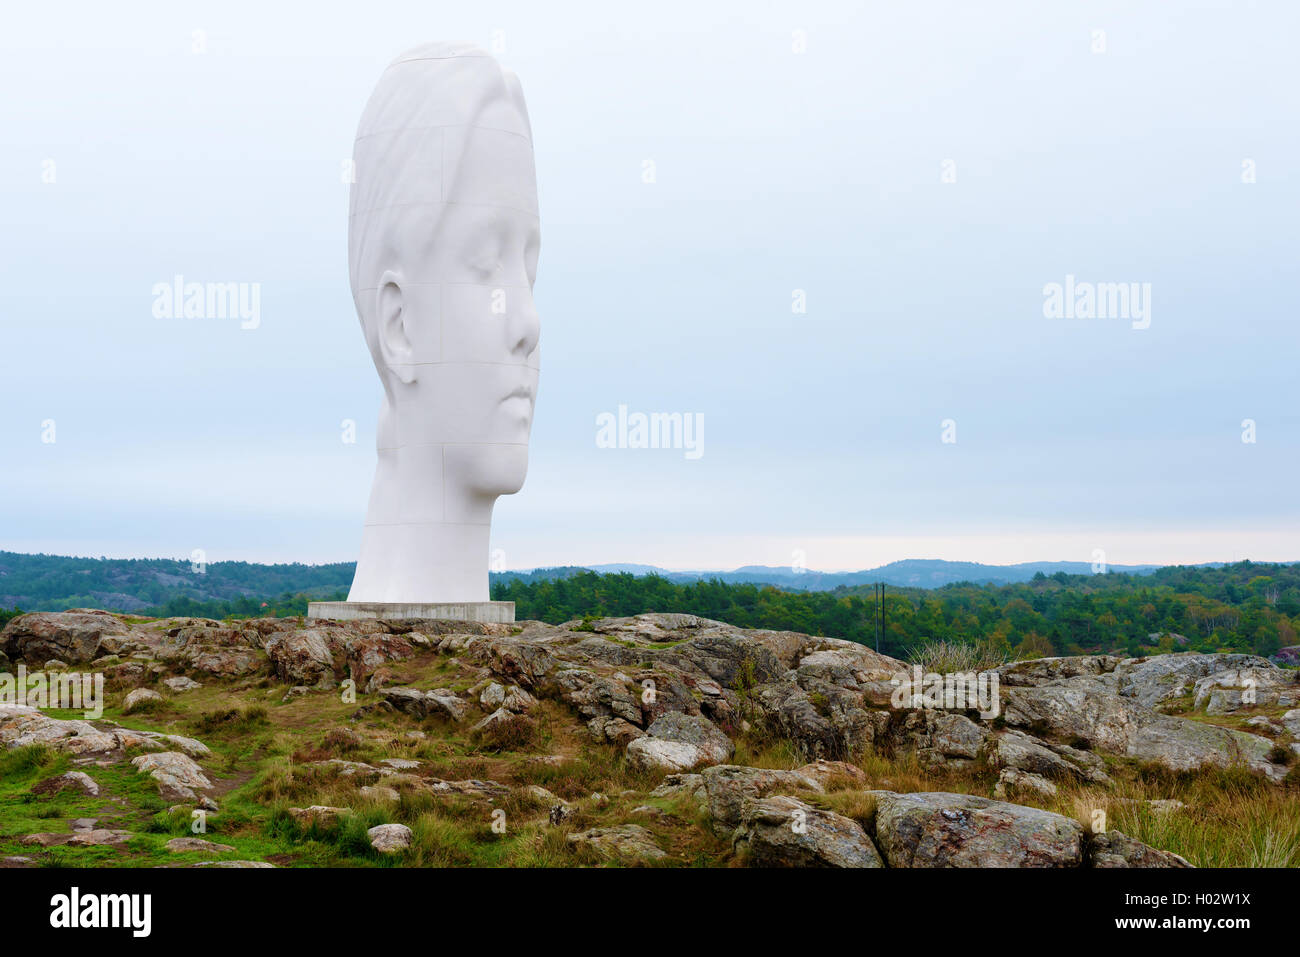 Pilane, Sweden - September 9, 2016: Environmental documentary of the public nature and surroundings near the white marble female Stock Photo